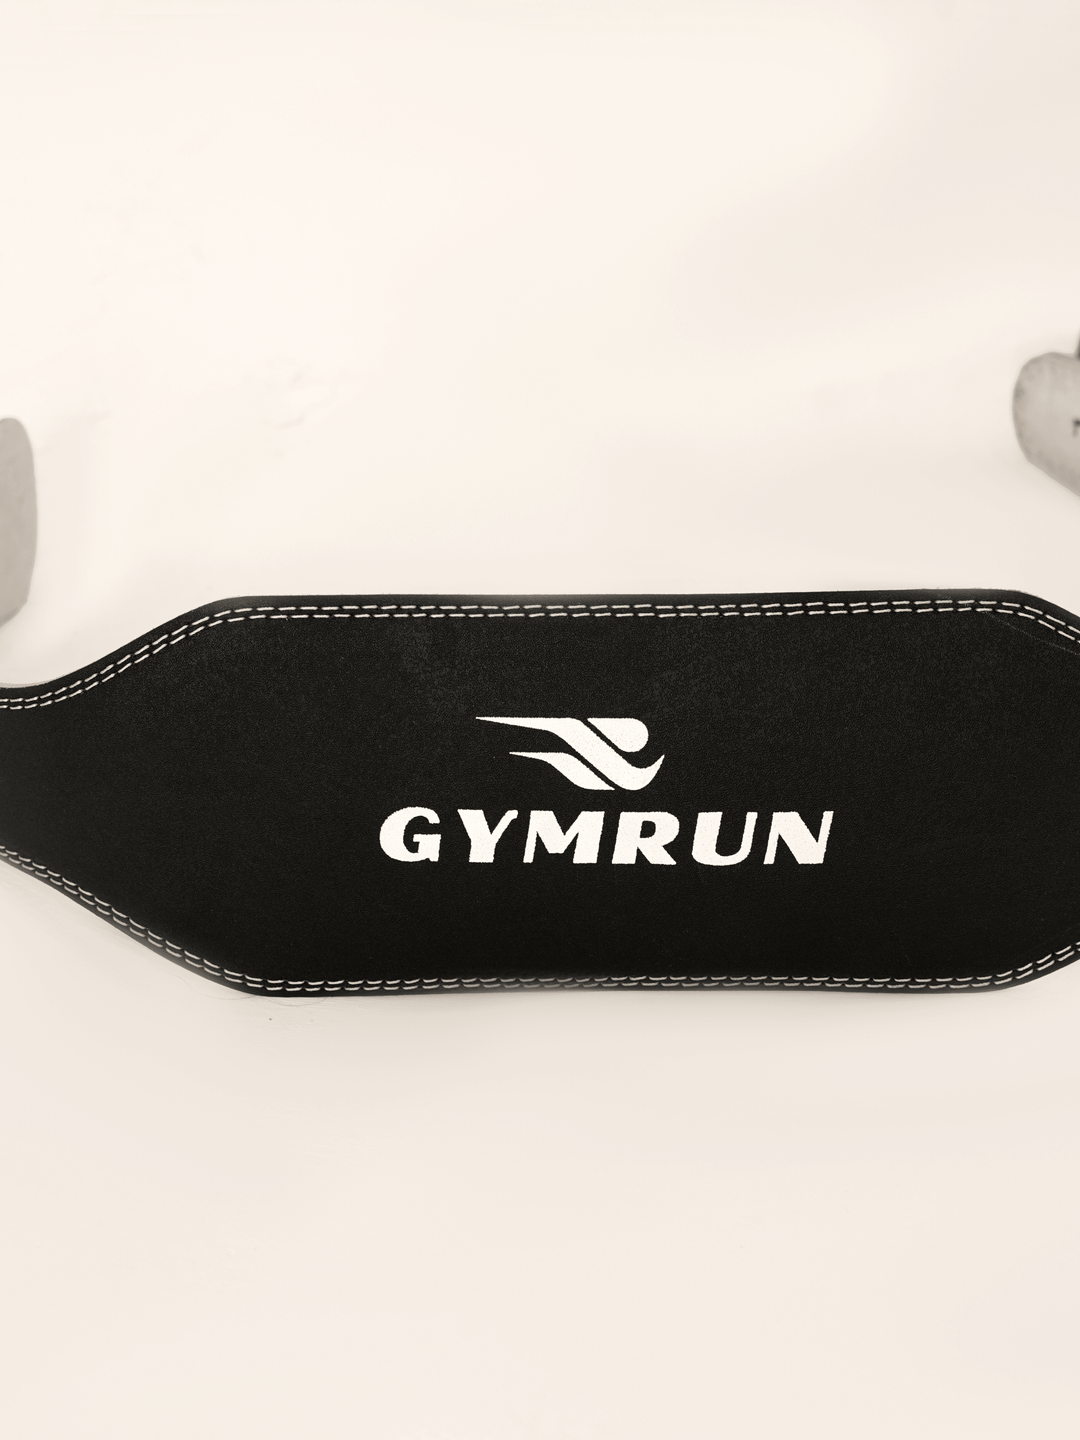 GYMRUN Power Lifting Belt - GYMRUN Activewear